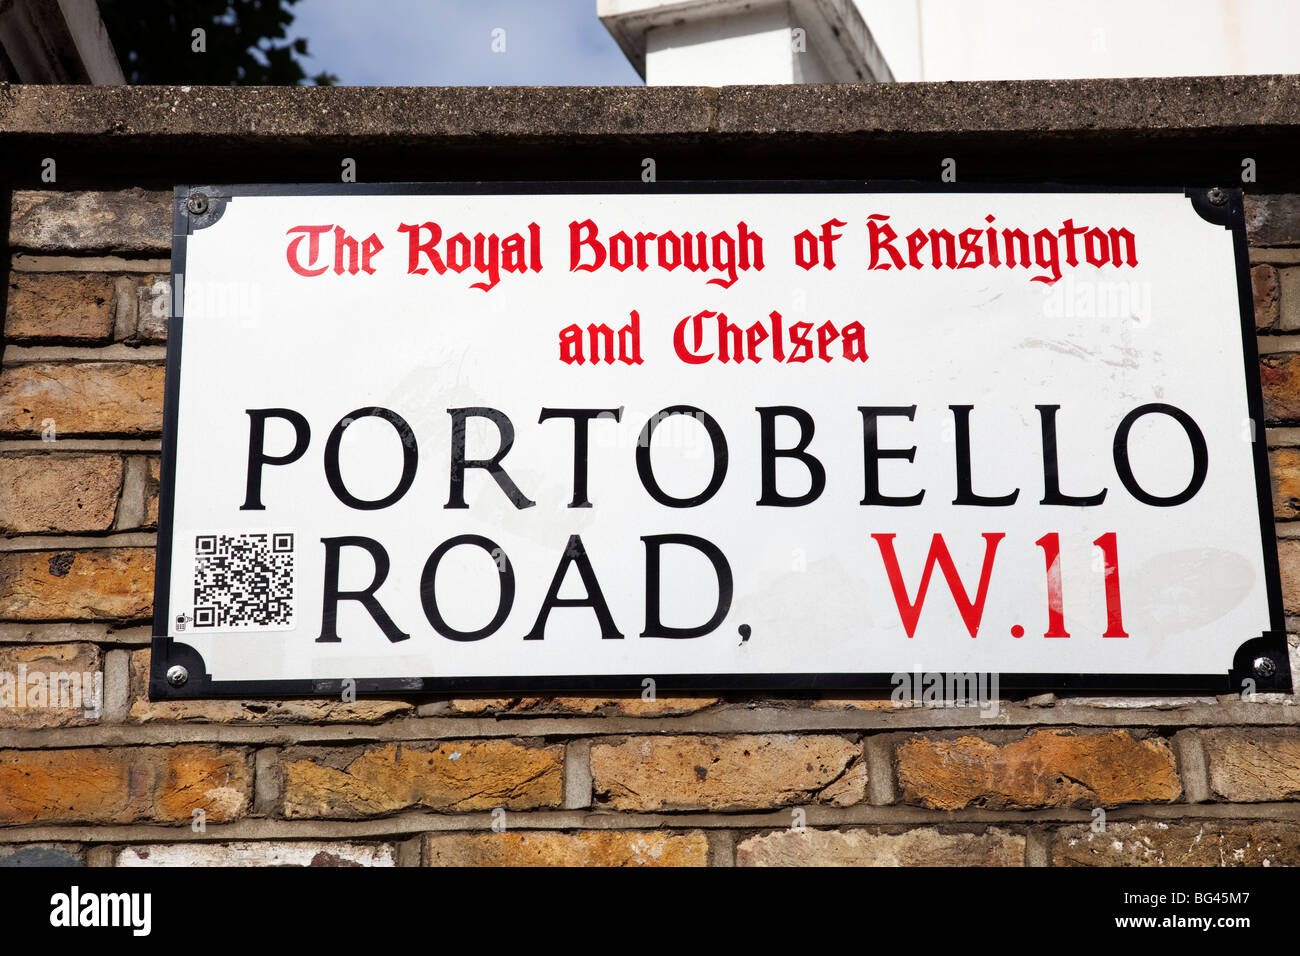 Portobello Road street sign, London. Stock Photo